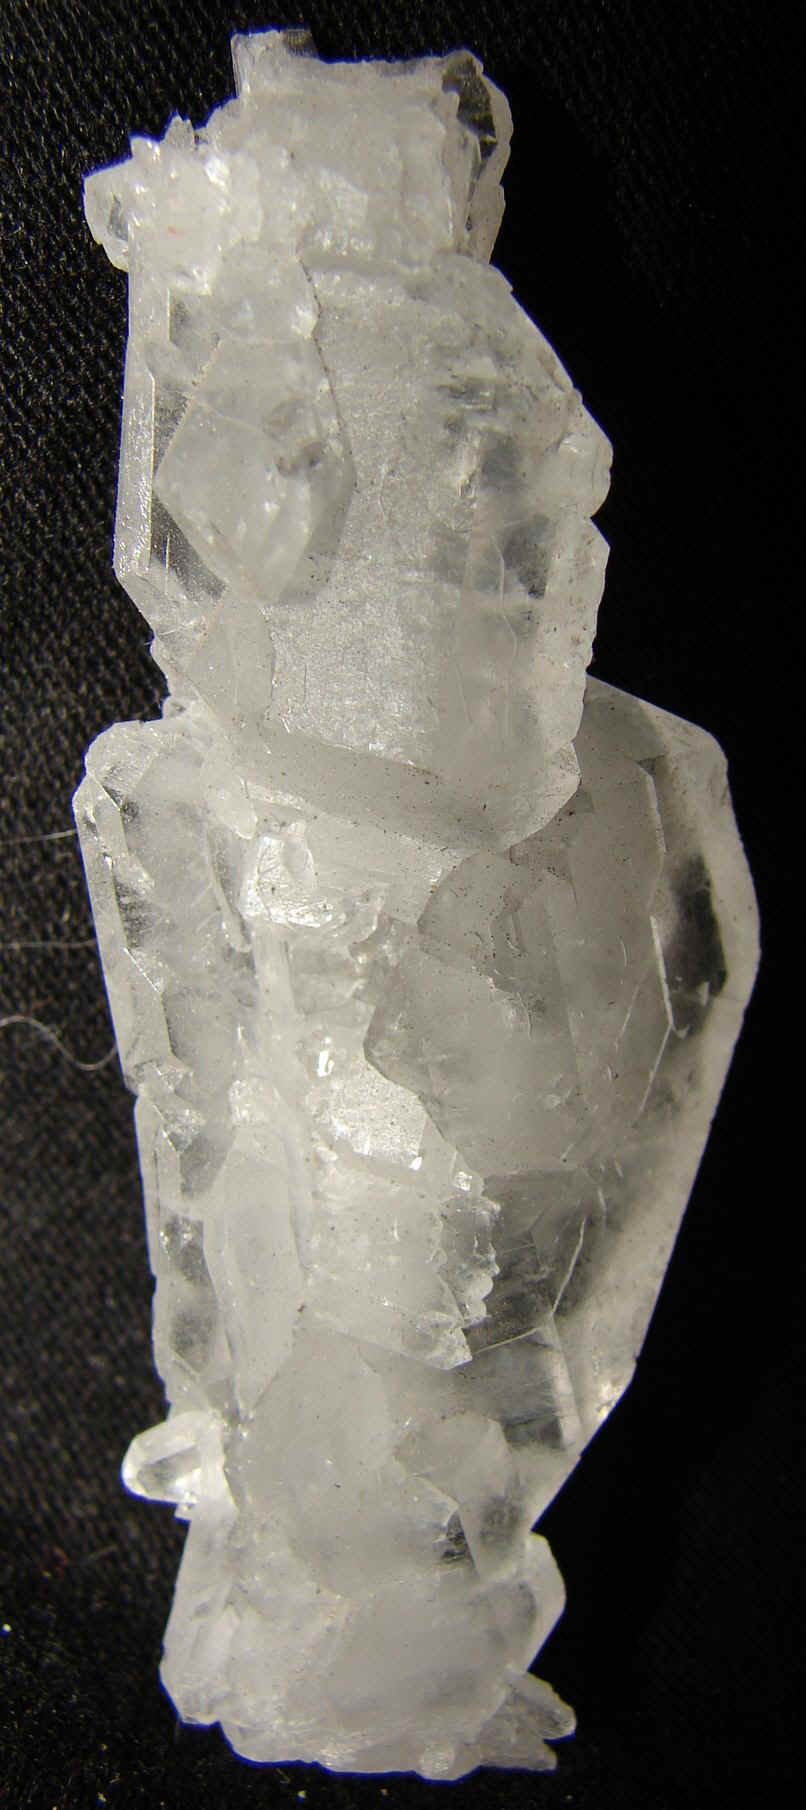 http://www.quartzcrystals.net/icexl-26.jpg (582341 bytes)